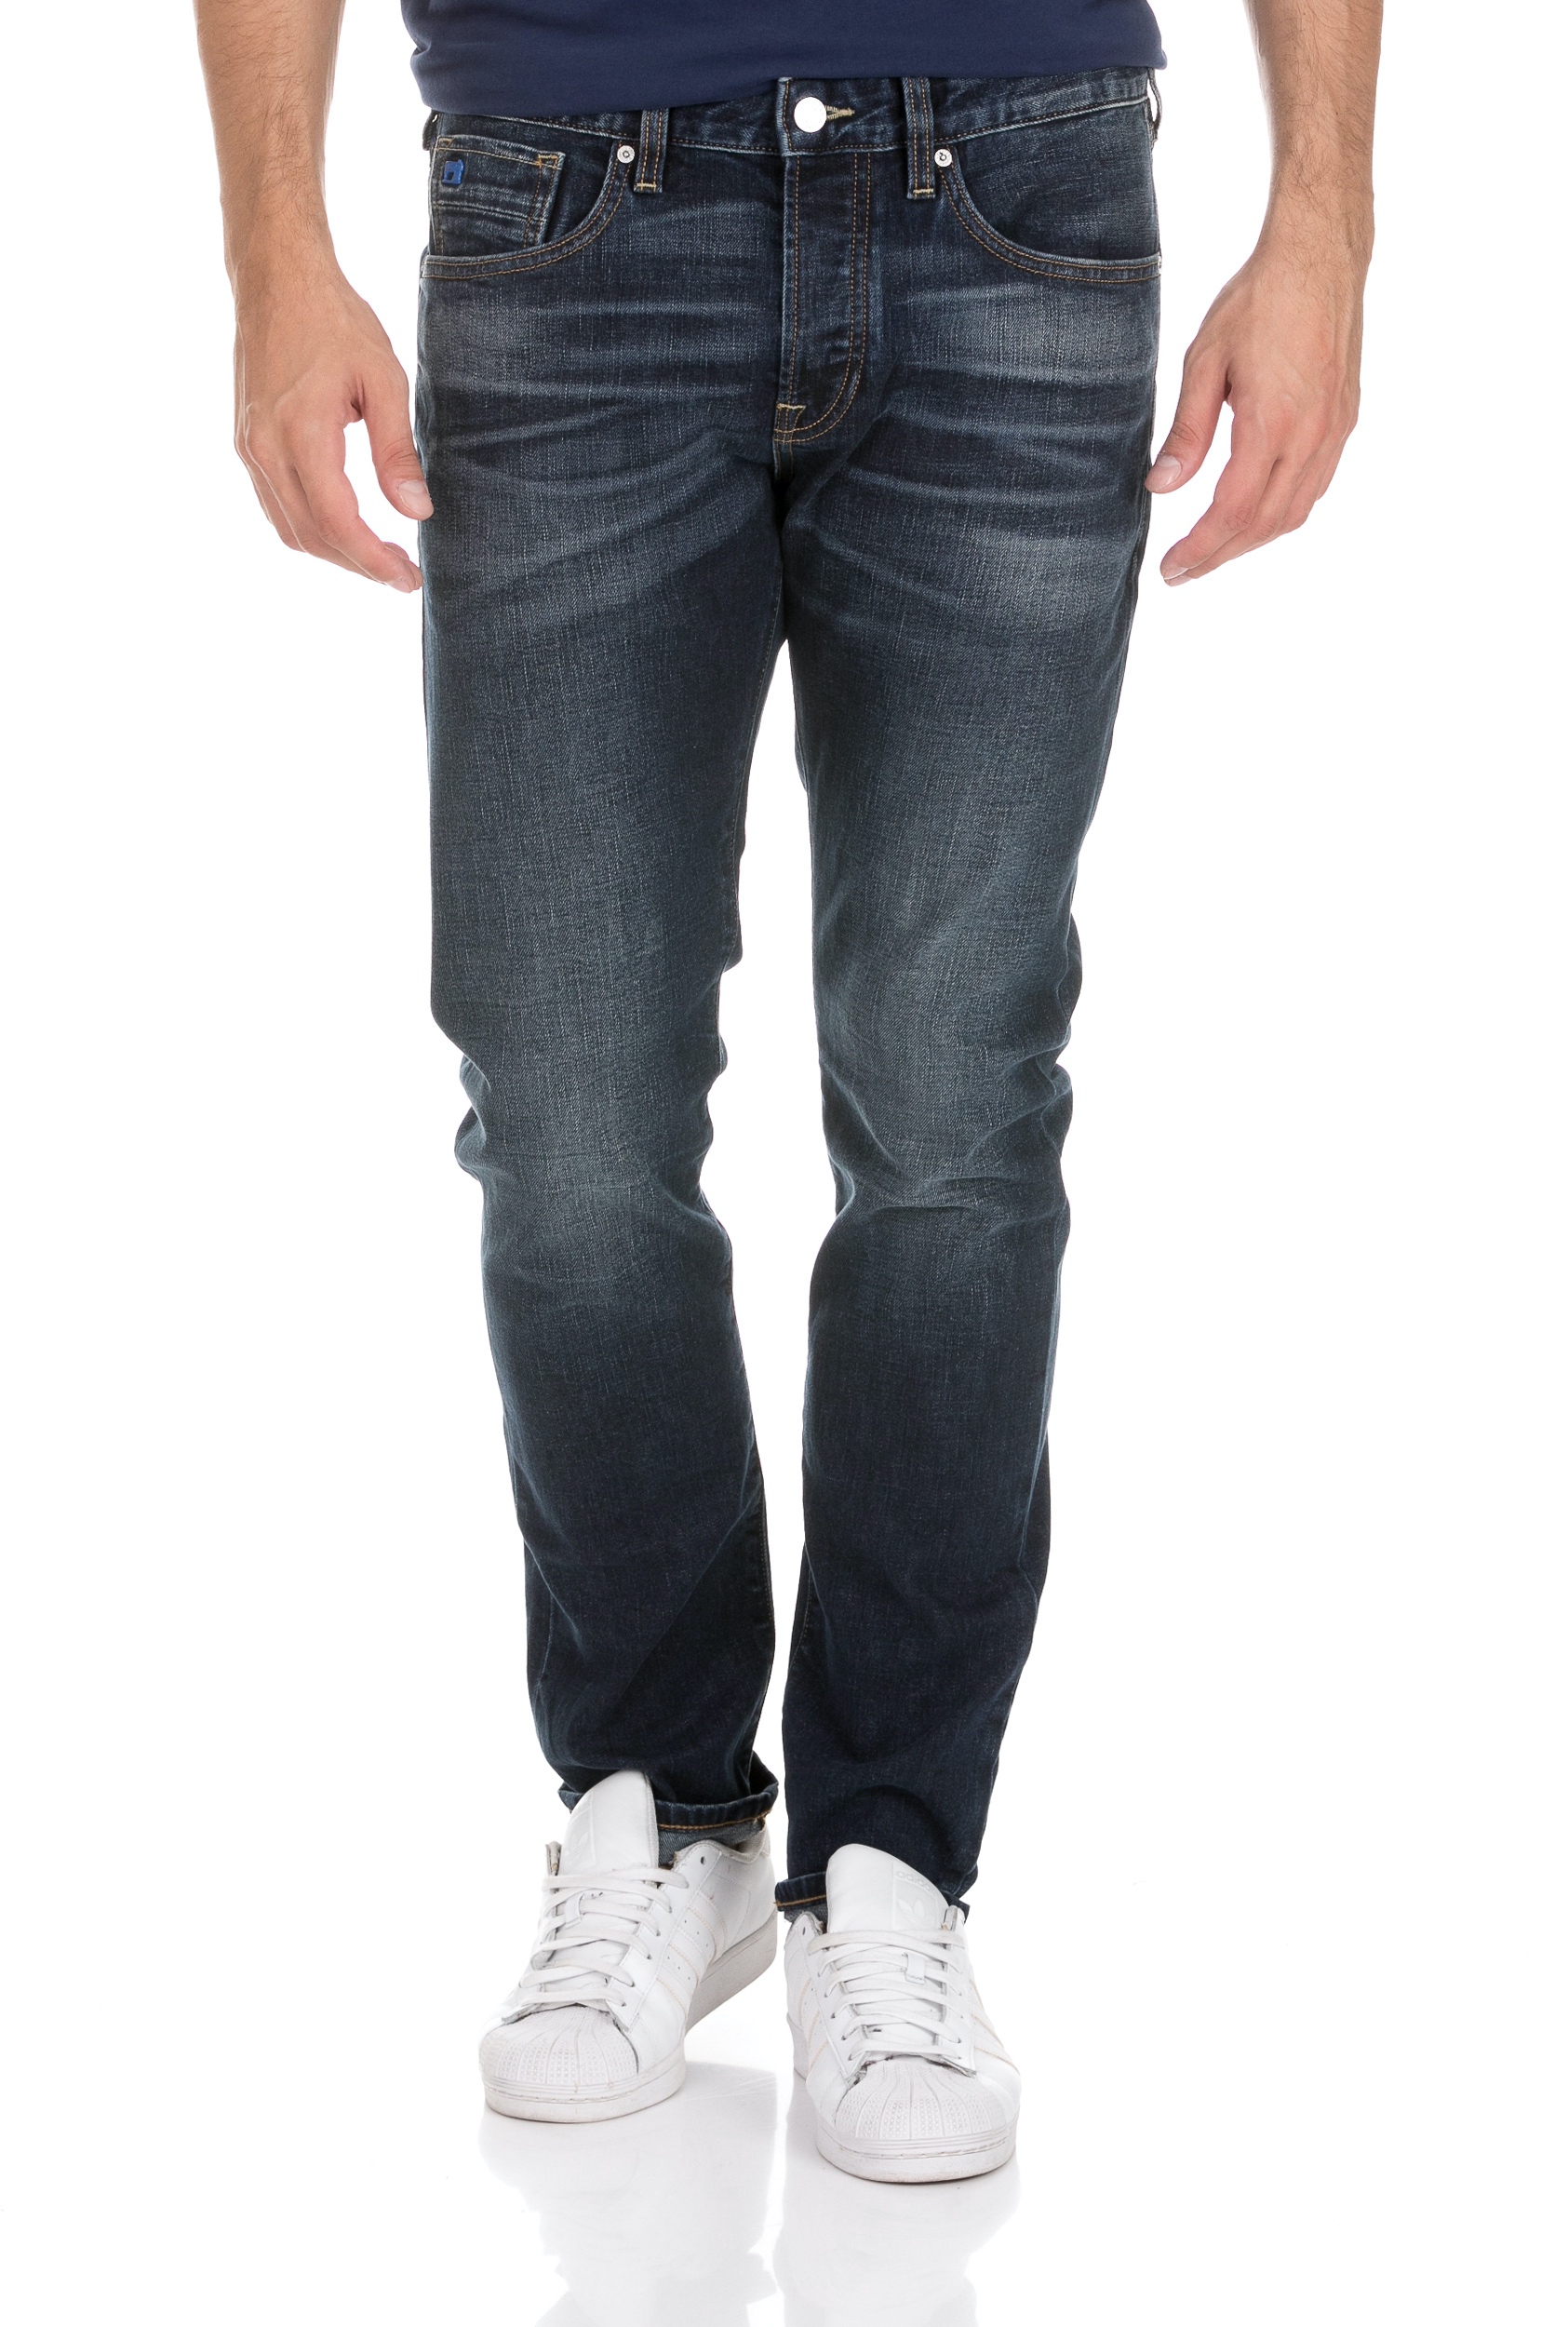 SCOTCH & SODA – Ανδρικό jean παντελόνι SCOTCH & SODA μπλε 1722097.0-0404